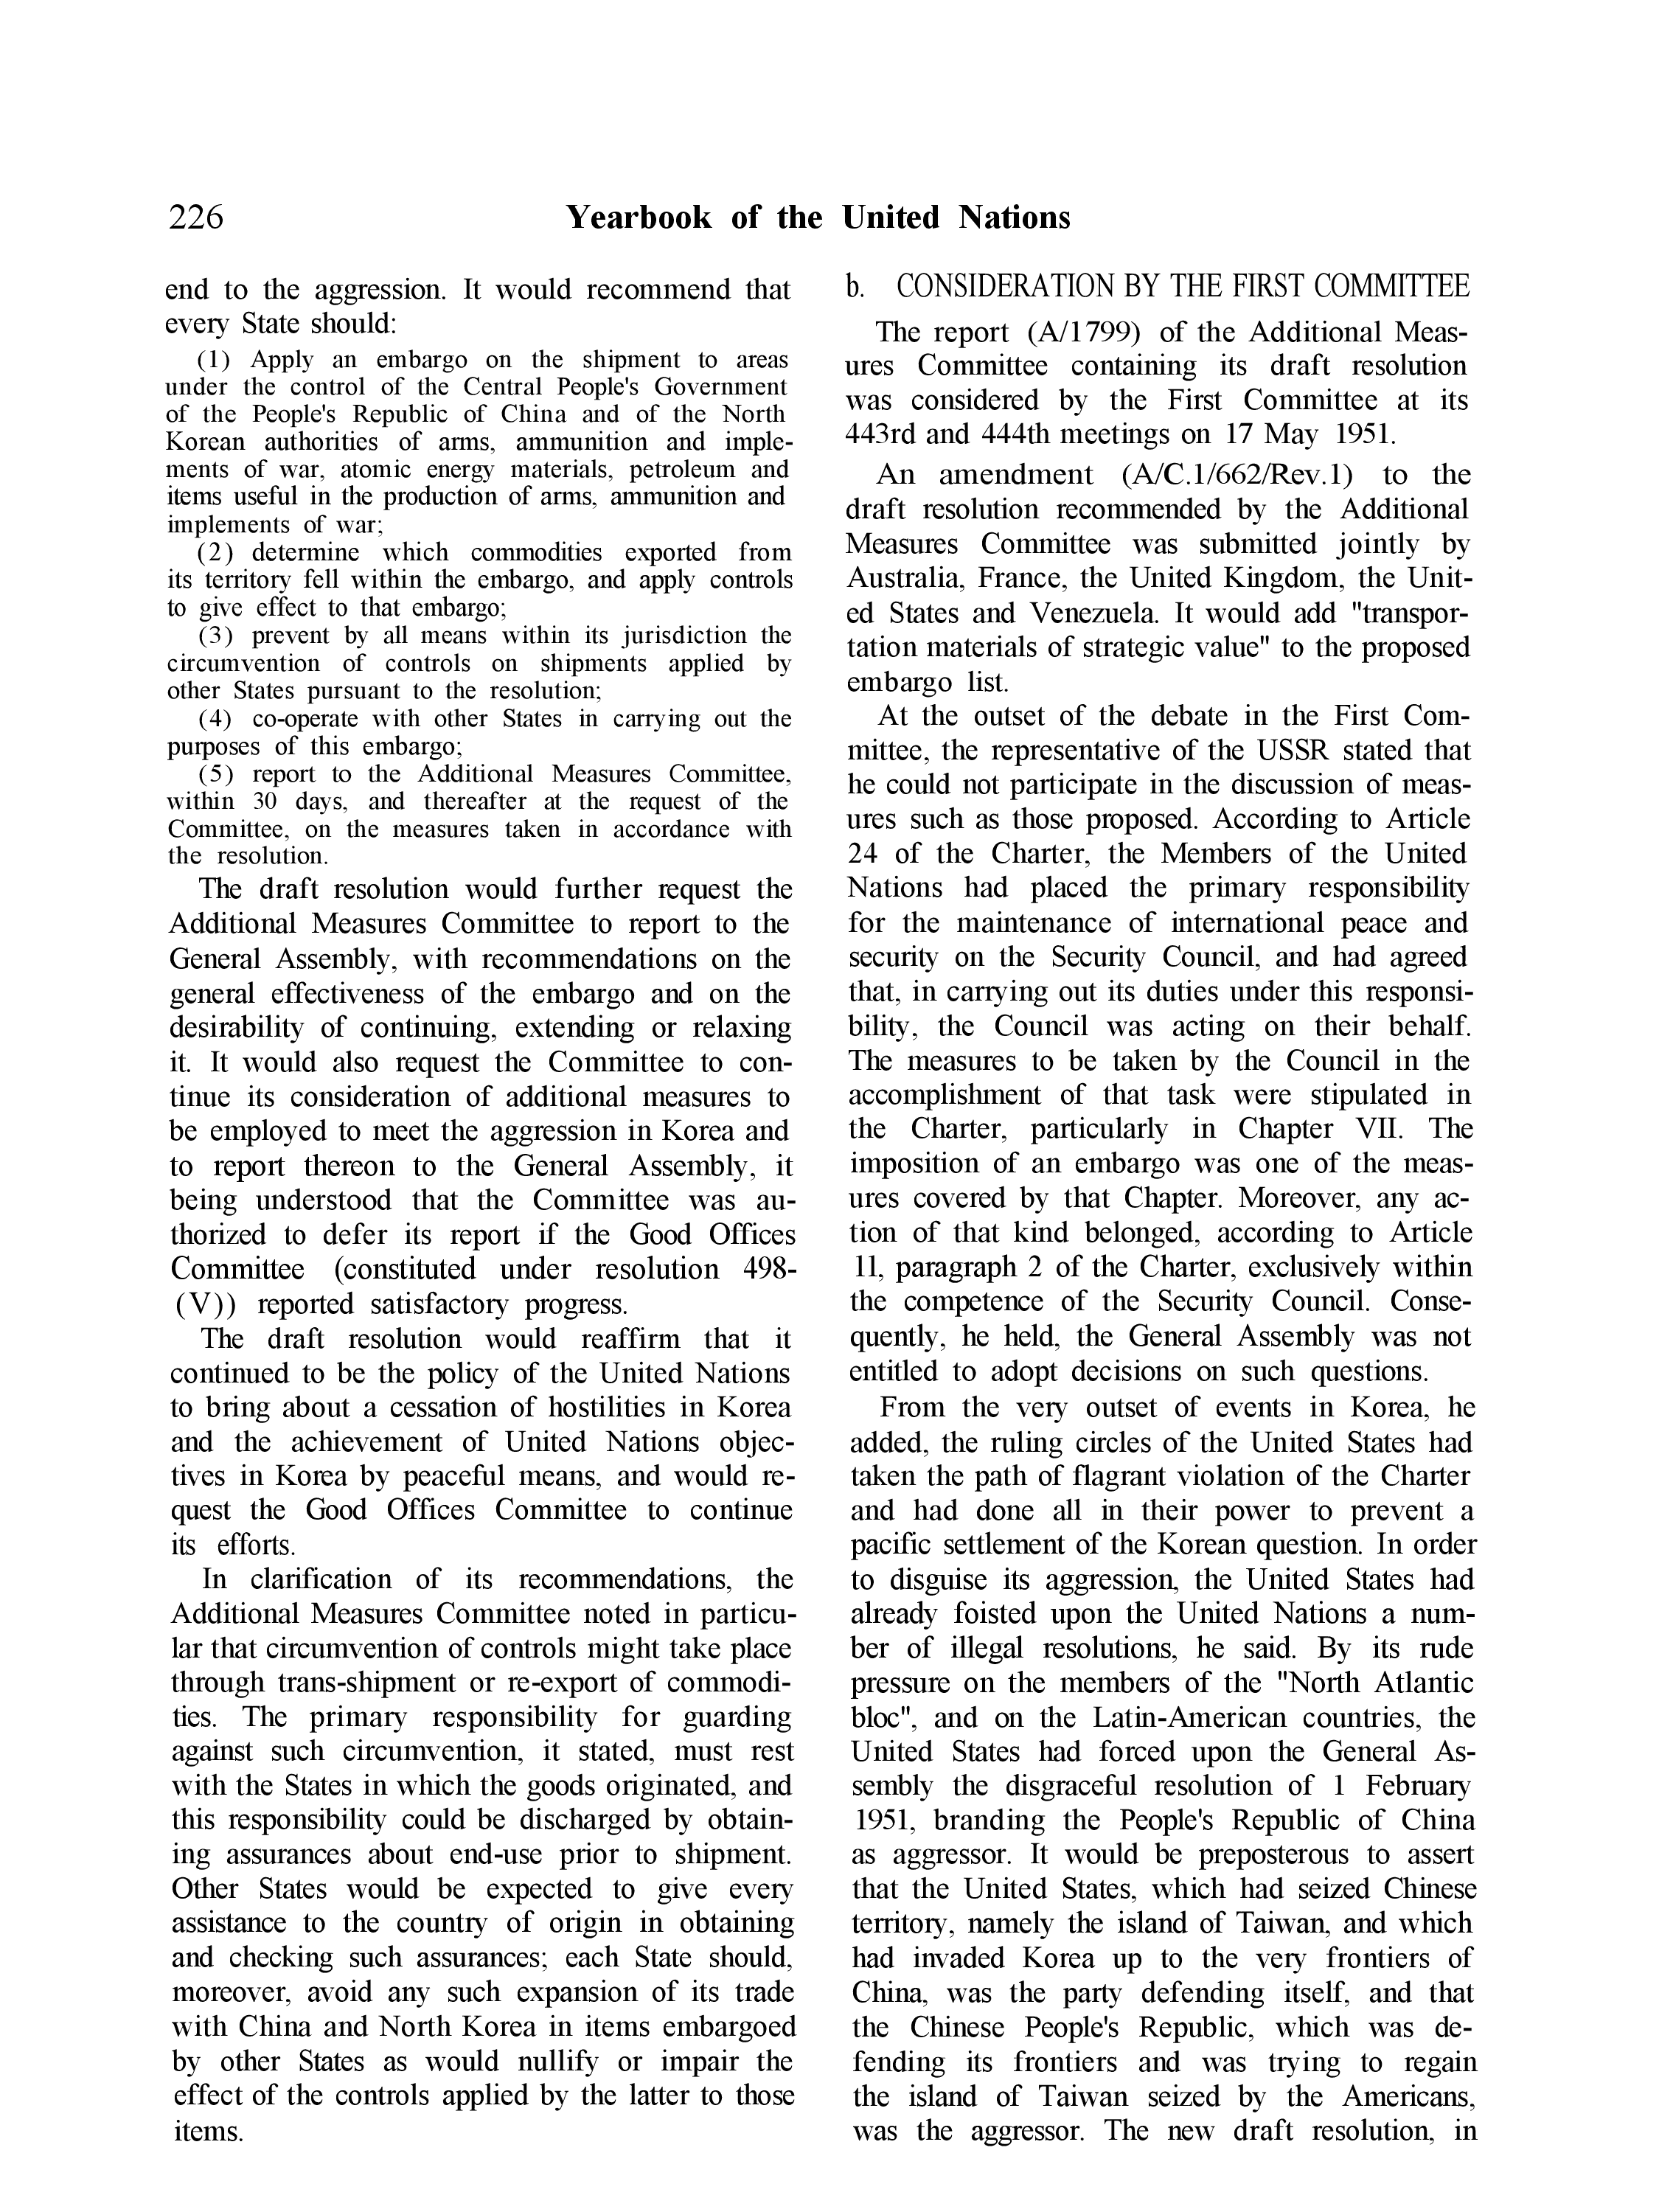 YUN Volume_Page 1951_236